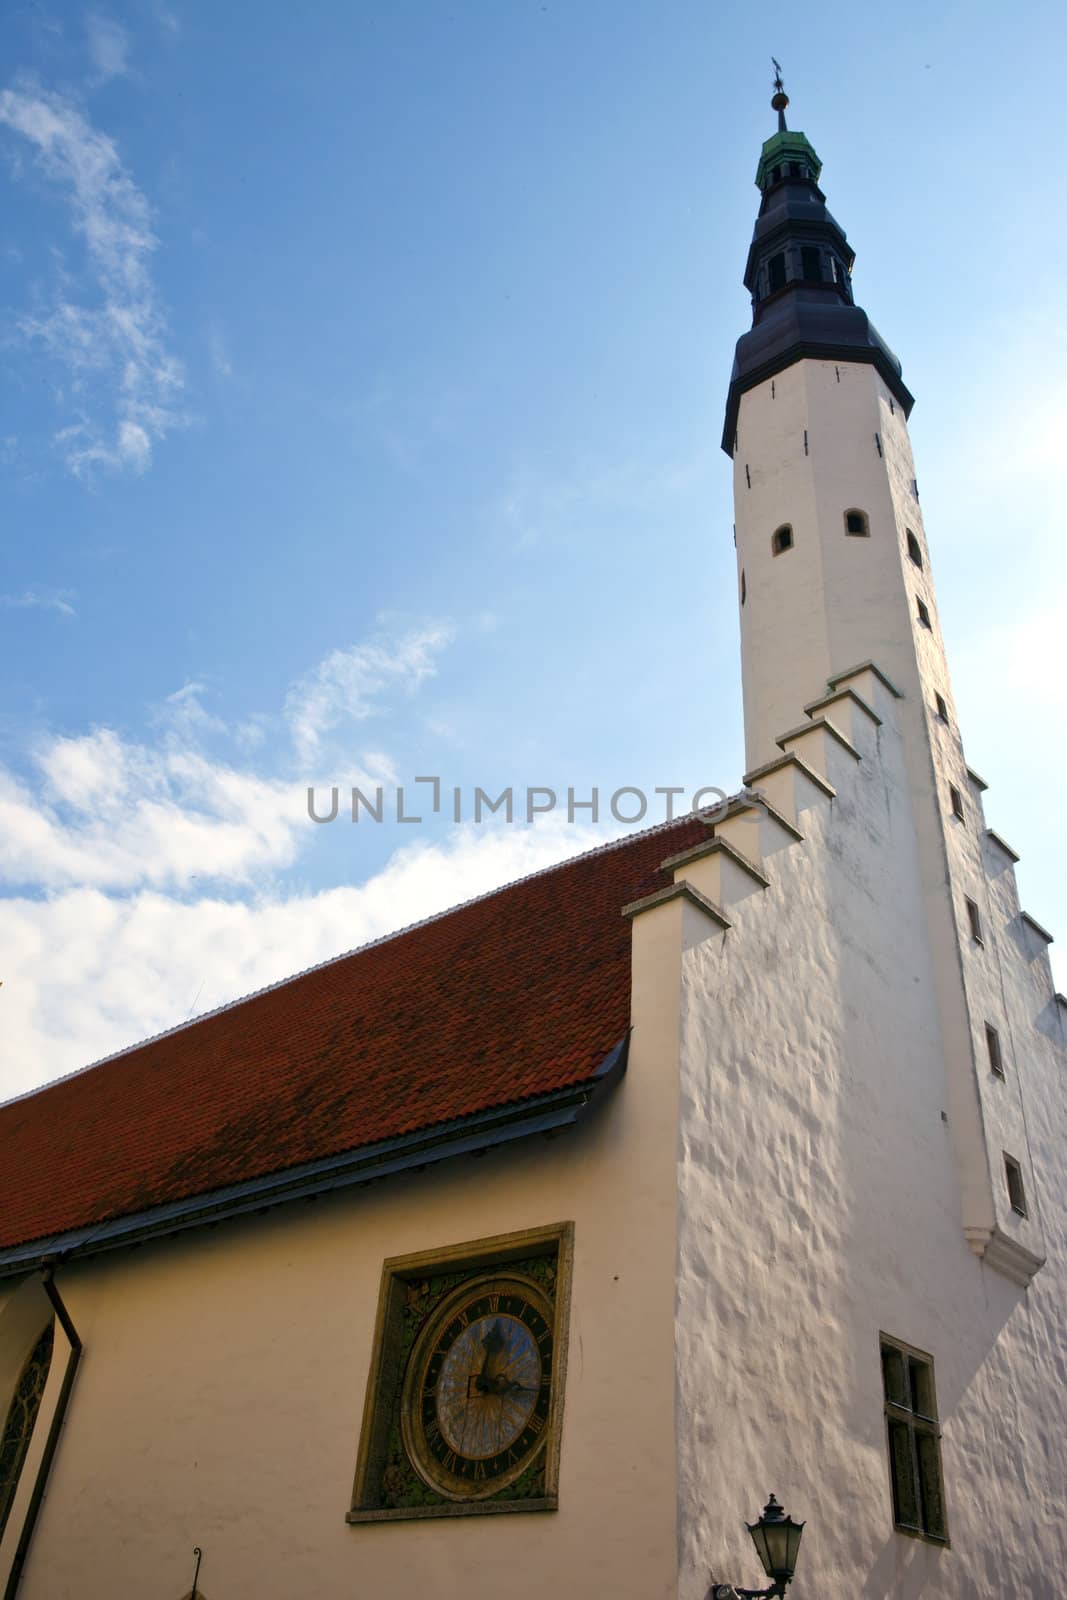 Church of the Holy Ghost in Tallinn by chrisdorney